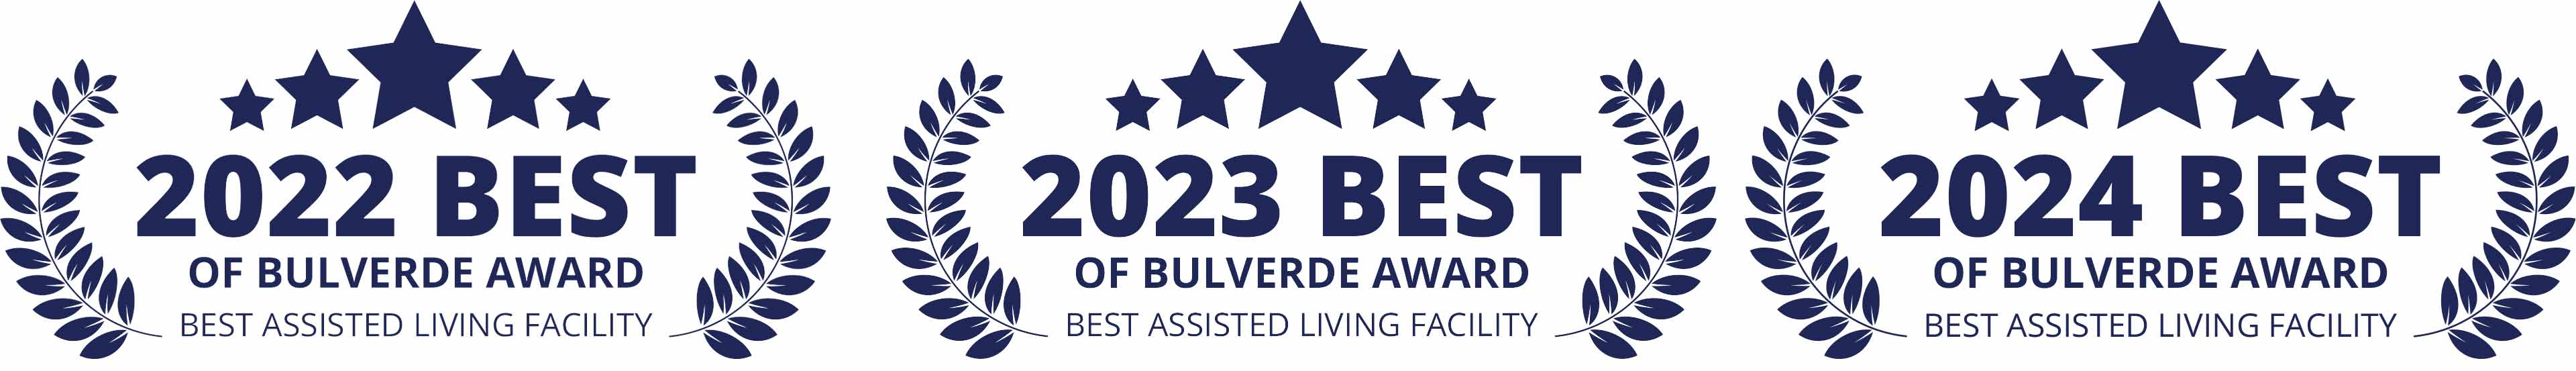 Best of Bulverde 2022,2023, 2024 Awards